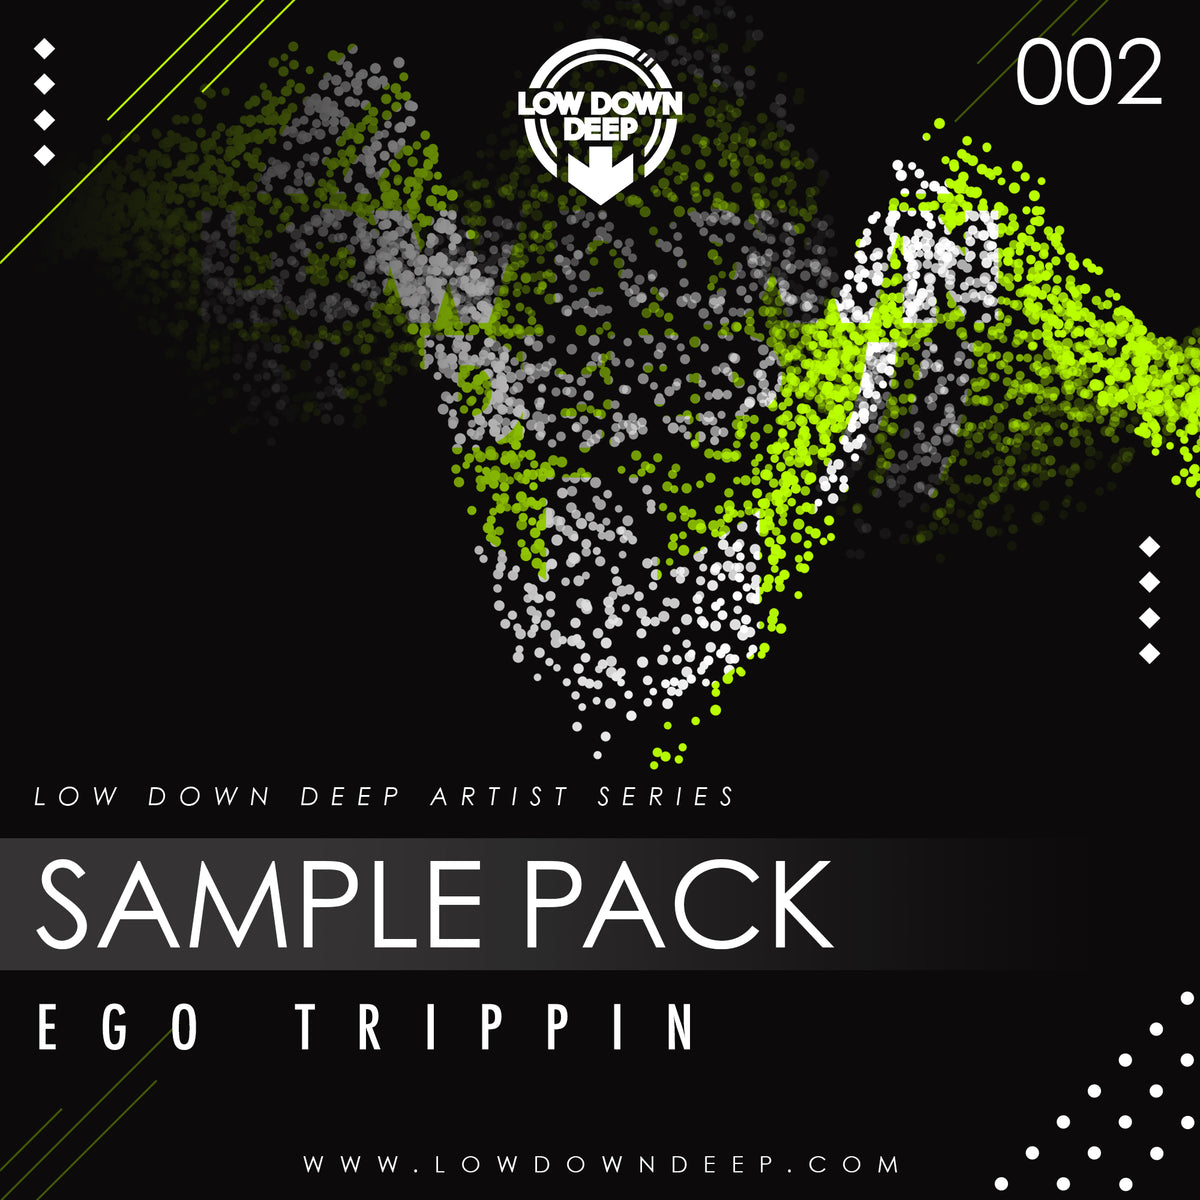 LDD Artist Series Sample Pack 002 - Ego Trippin